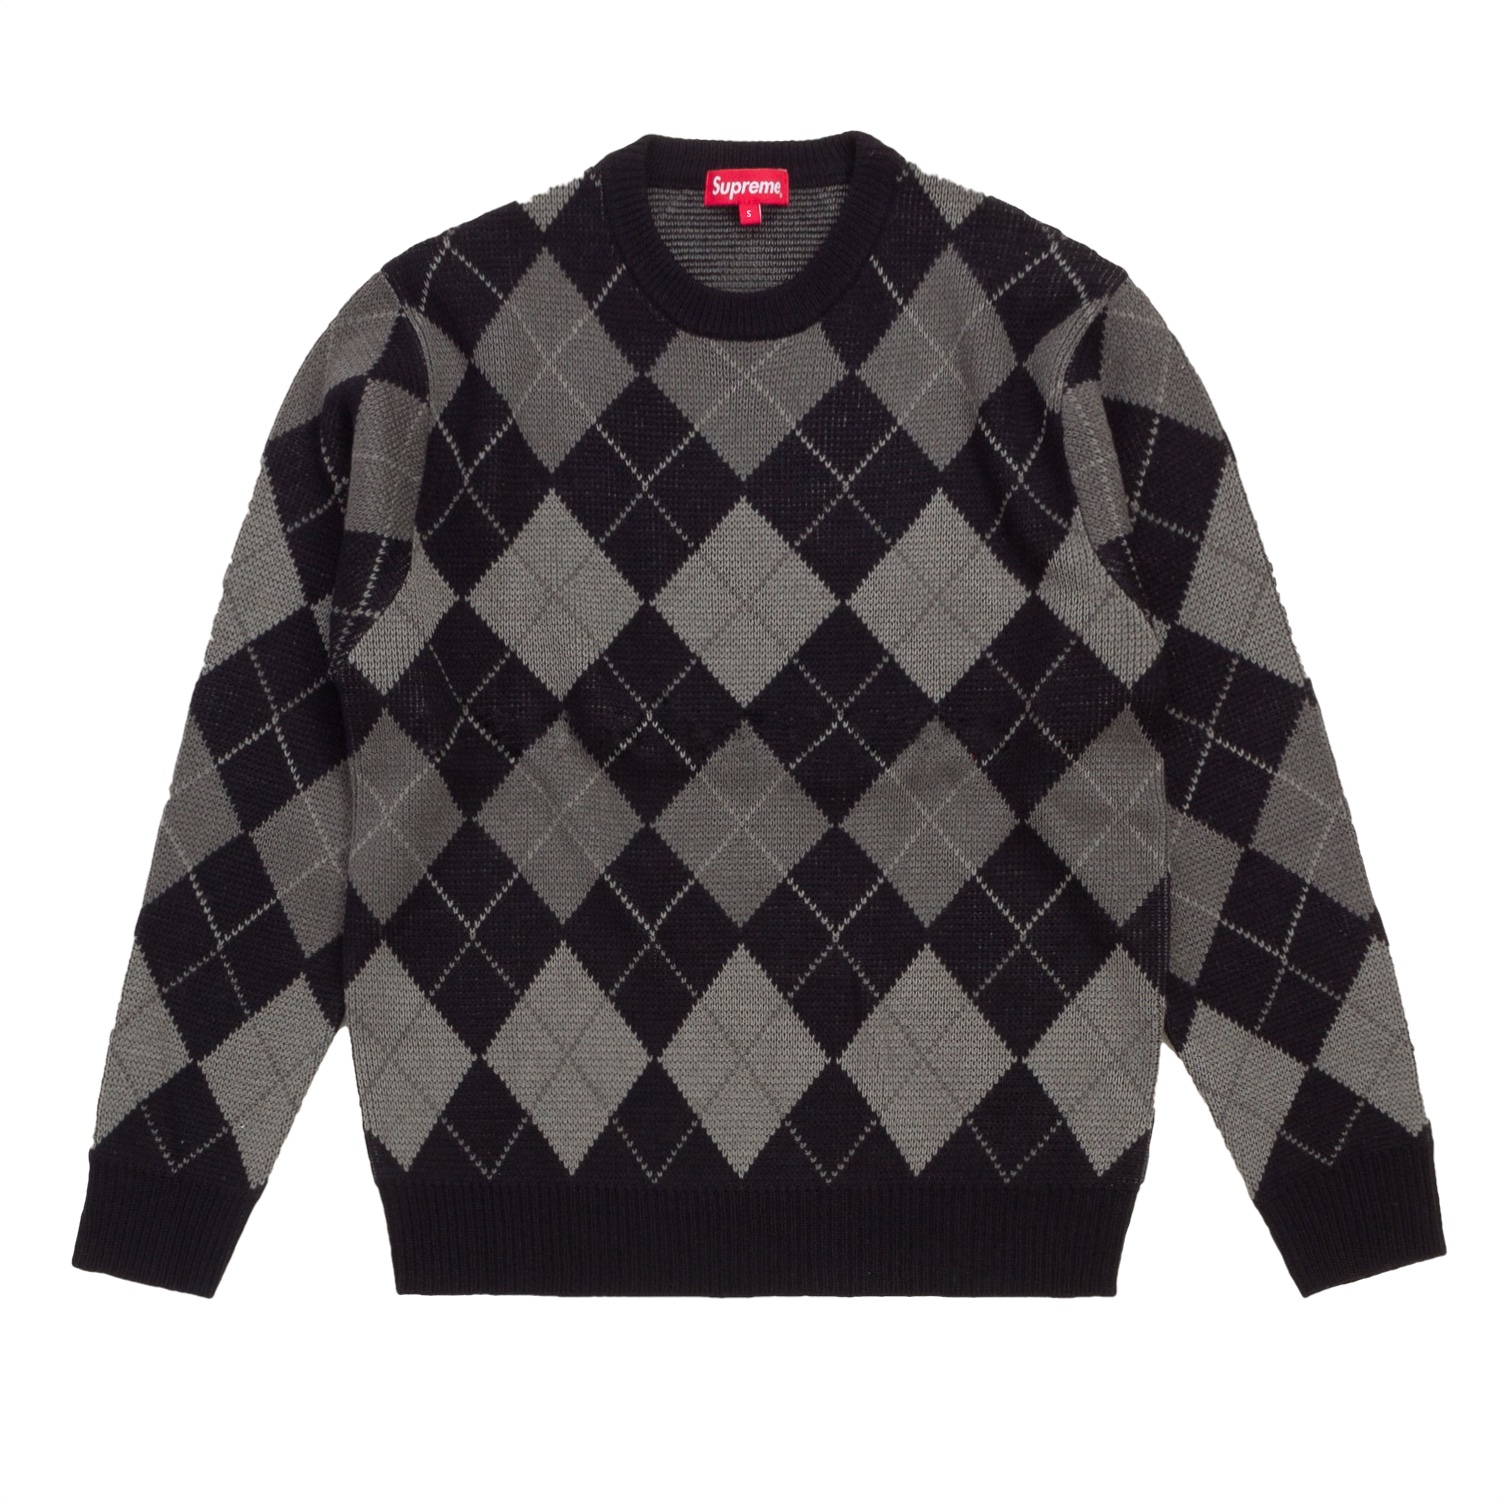 Supreme Argyle Crewneck Sweater Black - FW15 Men's - US